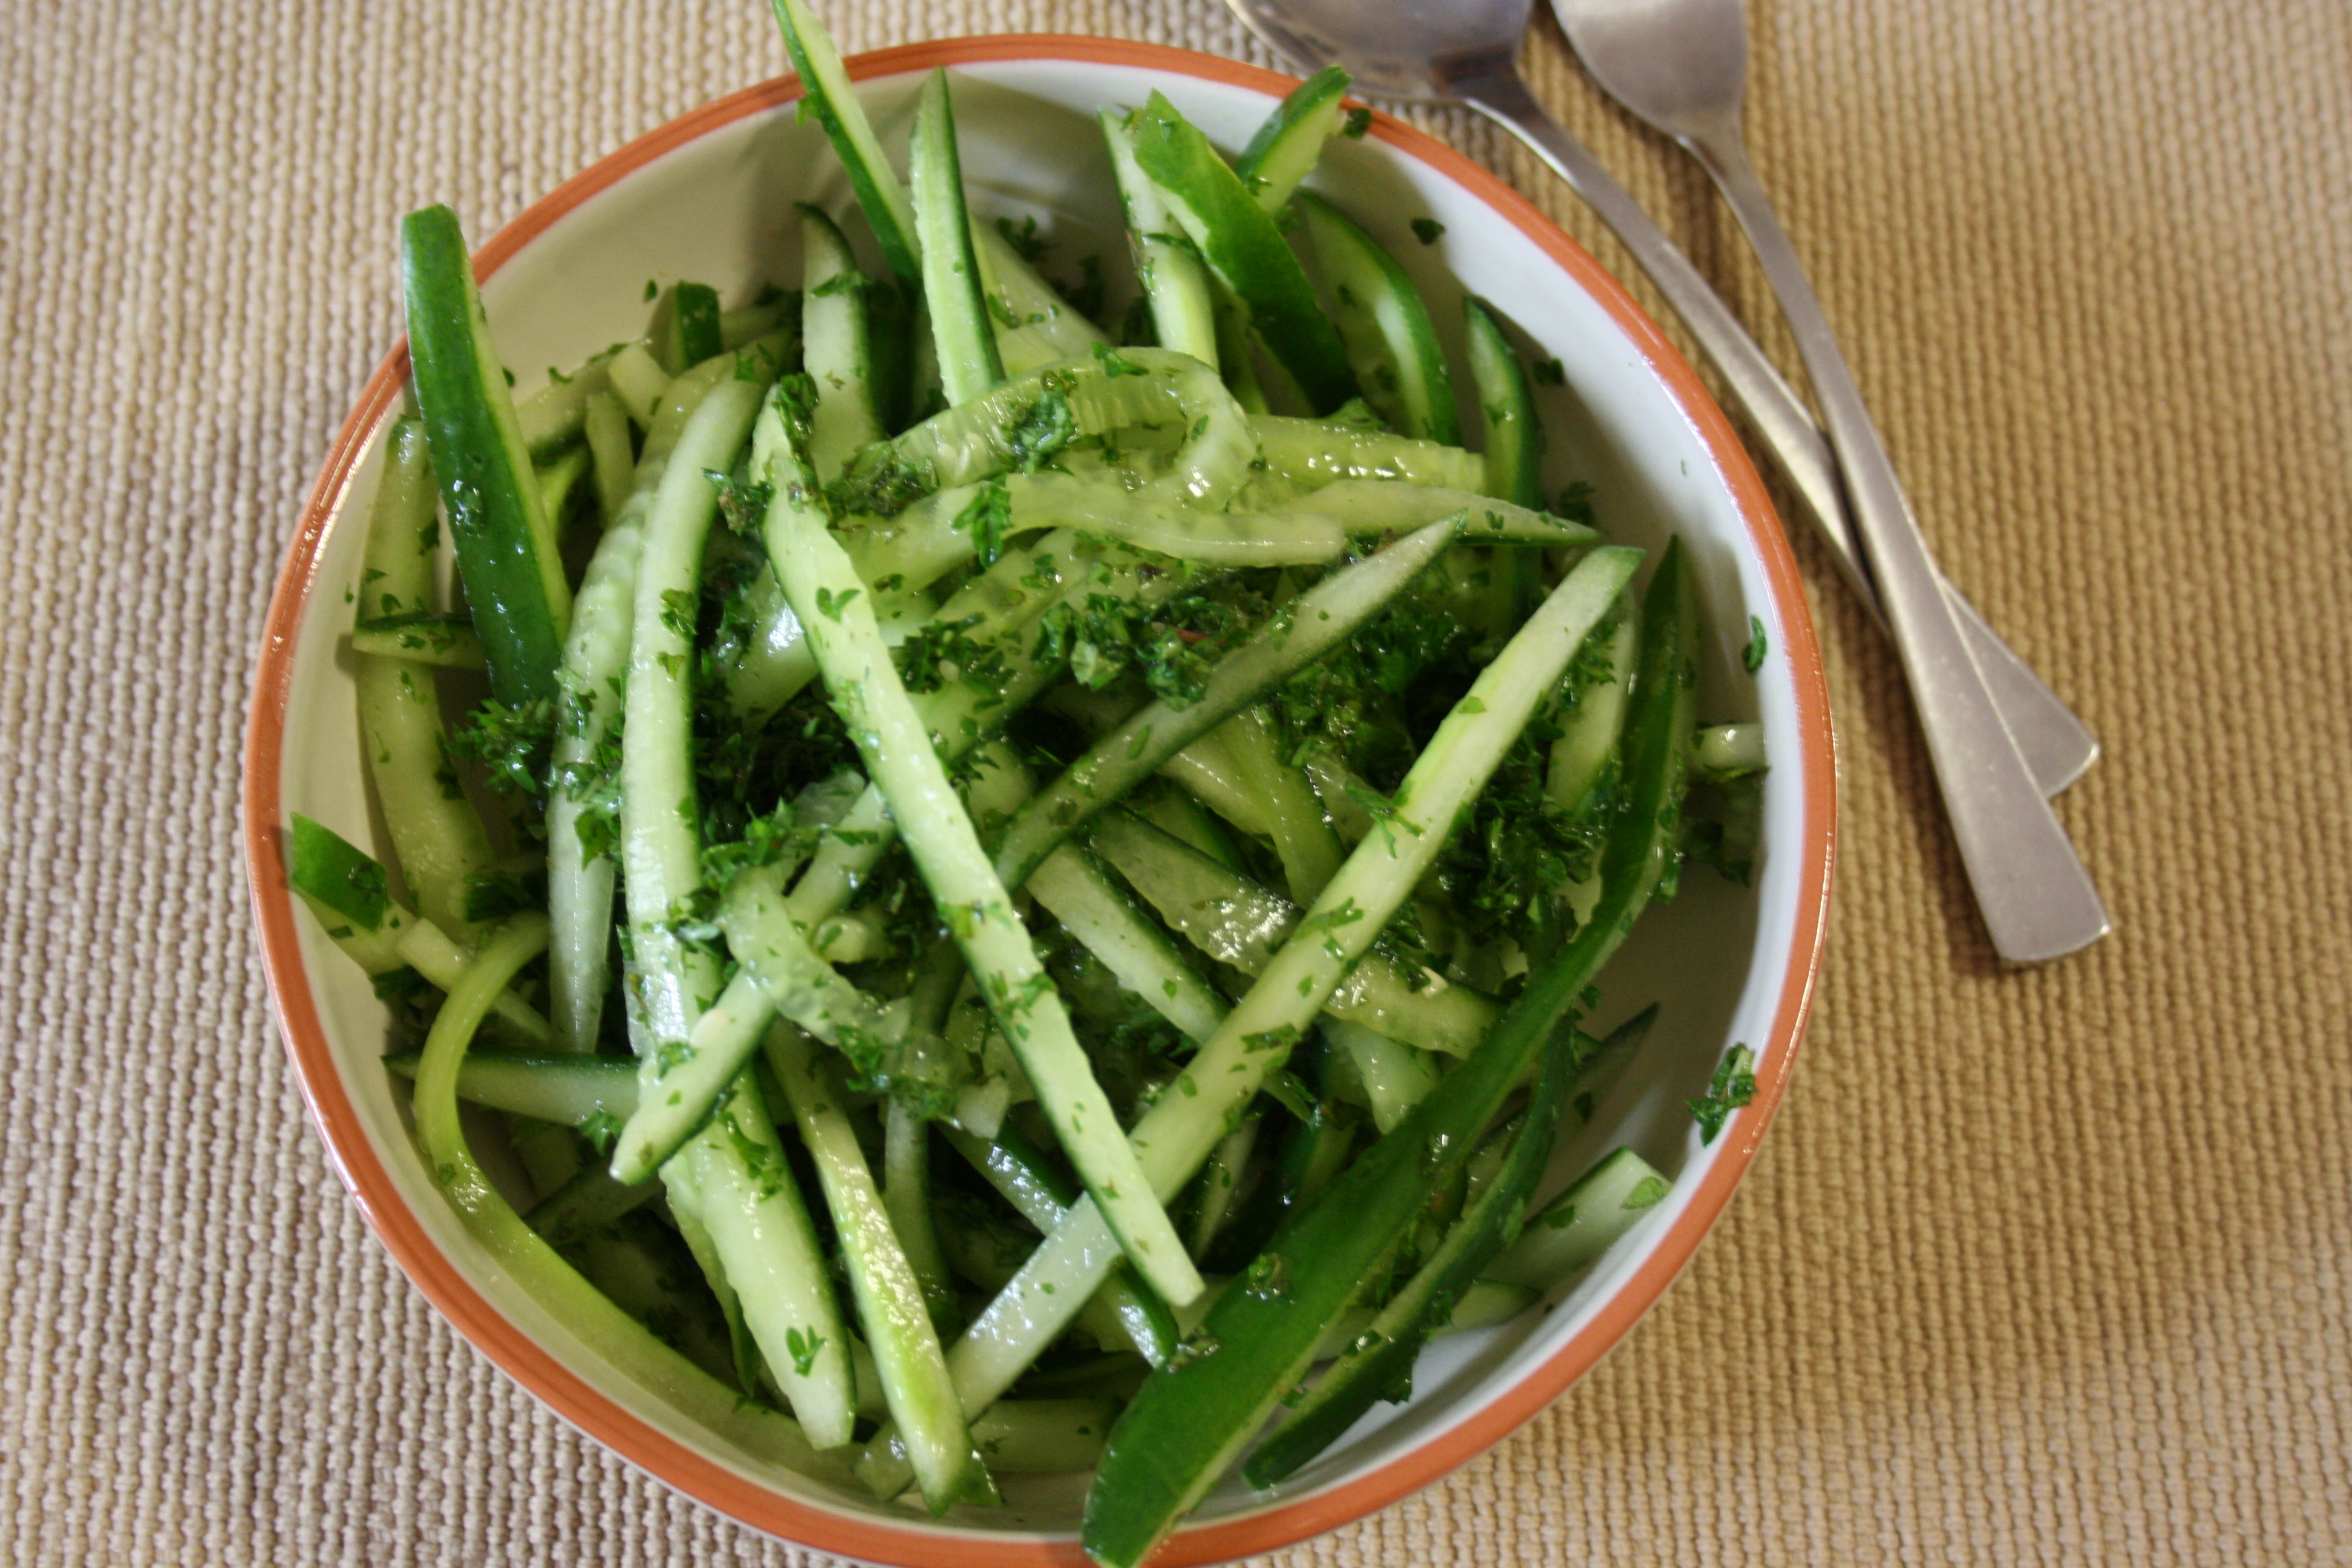 Recipe of the week: Cucumber Salad